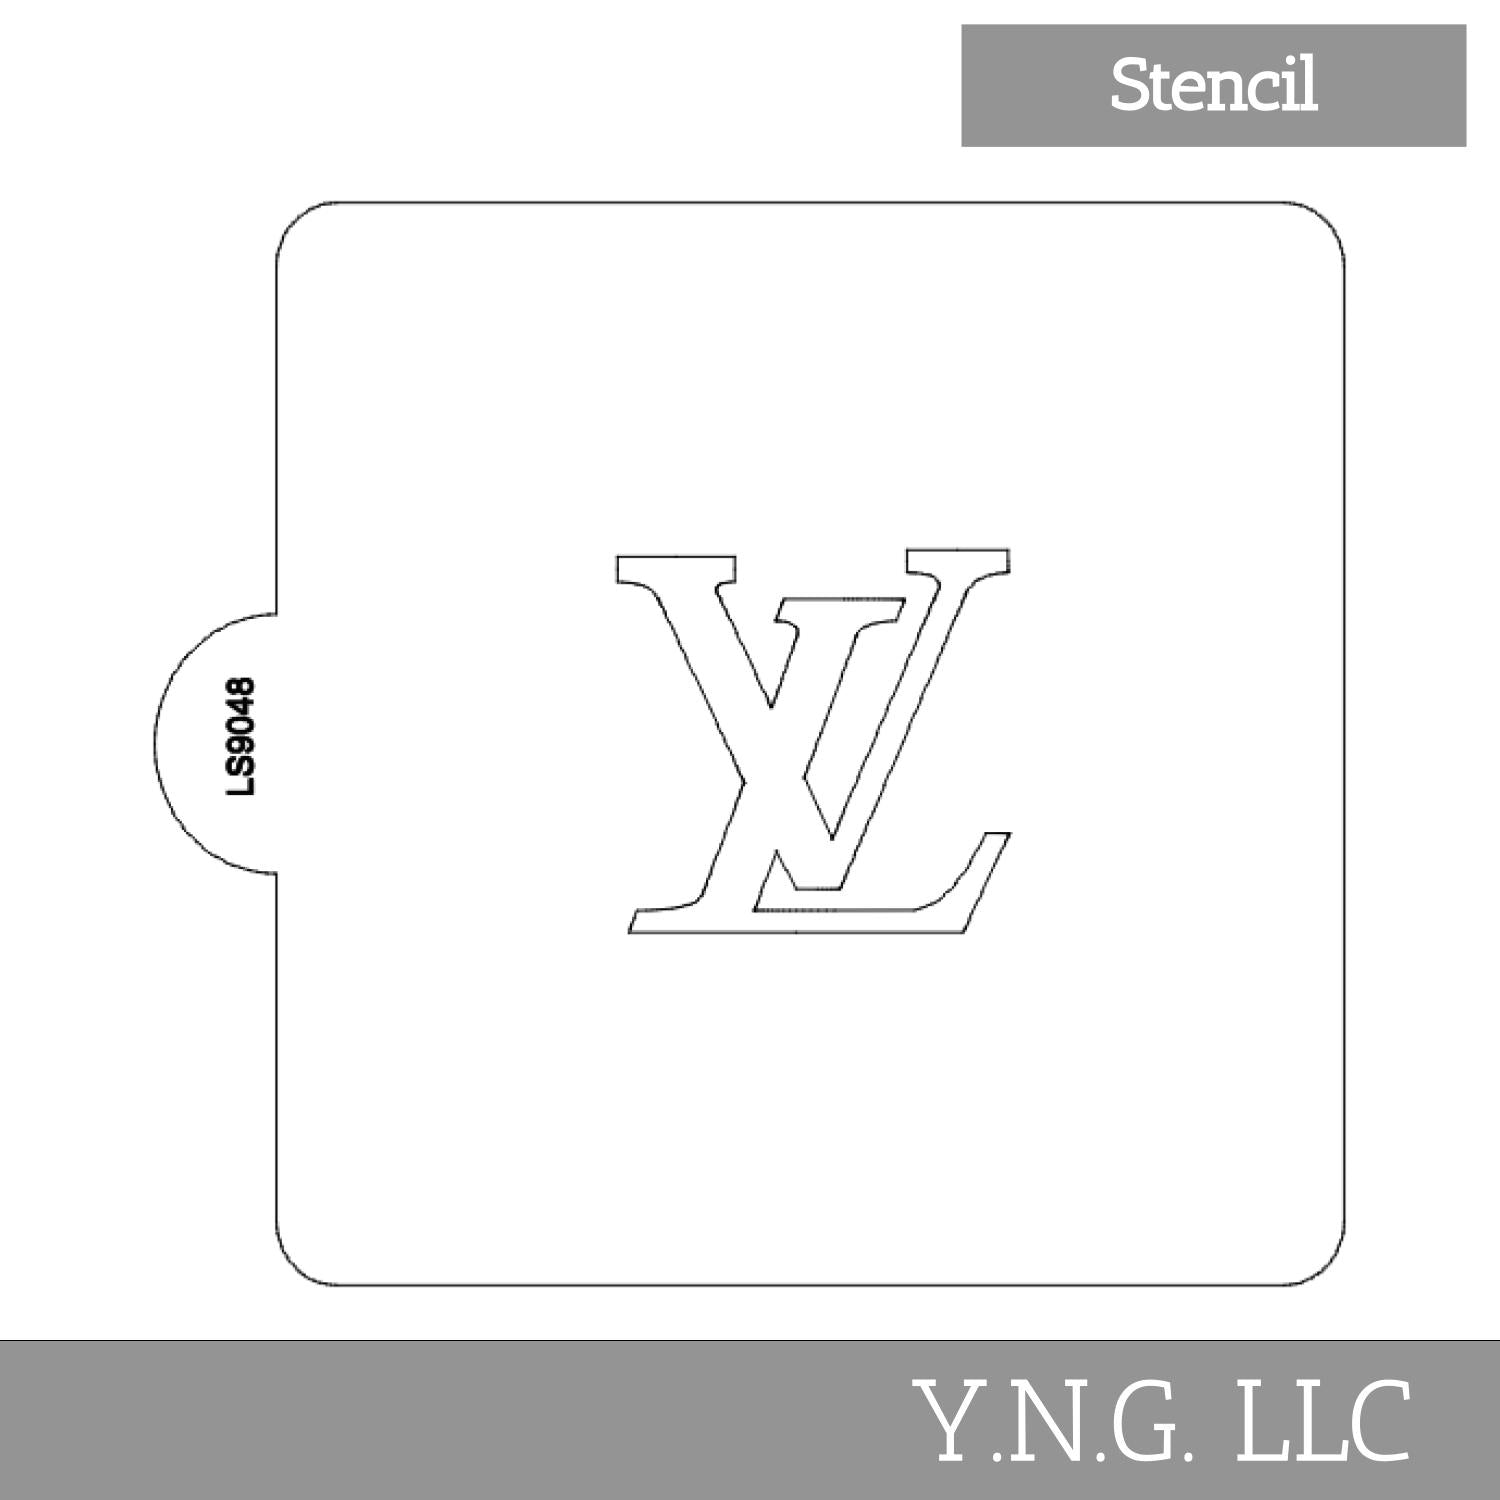 How to make Louis Vuitton Stencils (Cricut) 